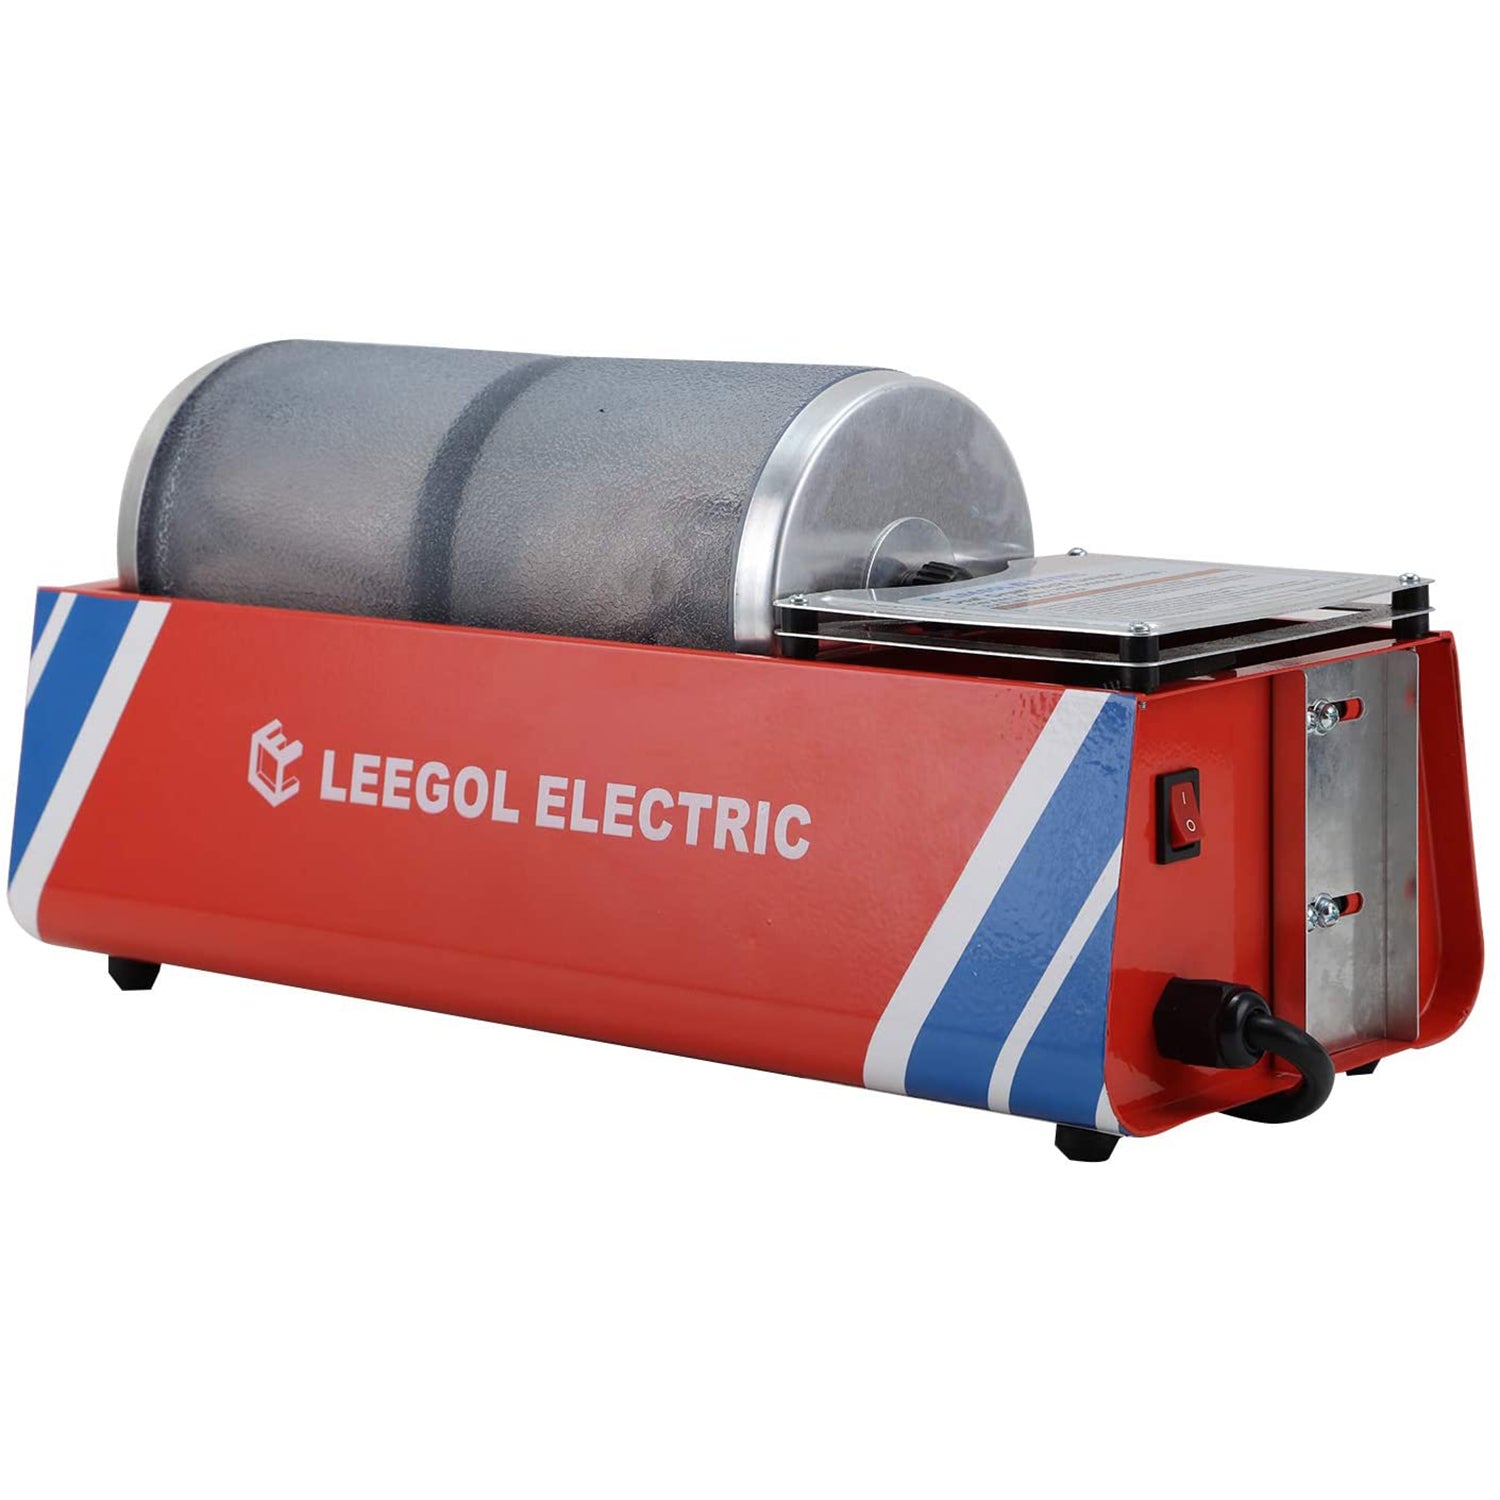 Leegol Electric Hobby Rock Tumbler Machine (Professional Double Barrel) - LeegolElectric